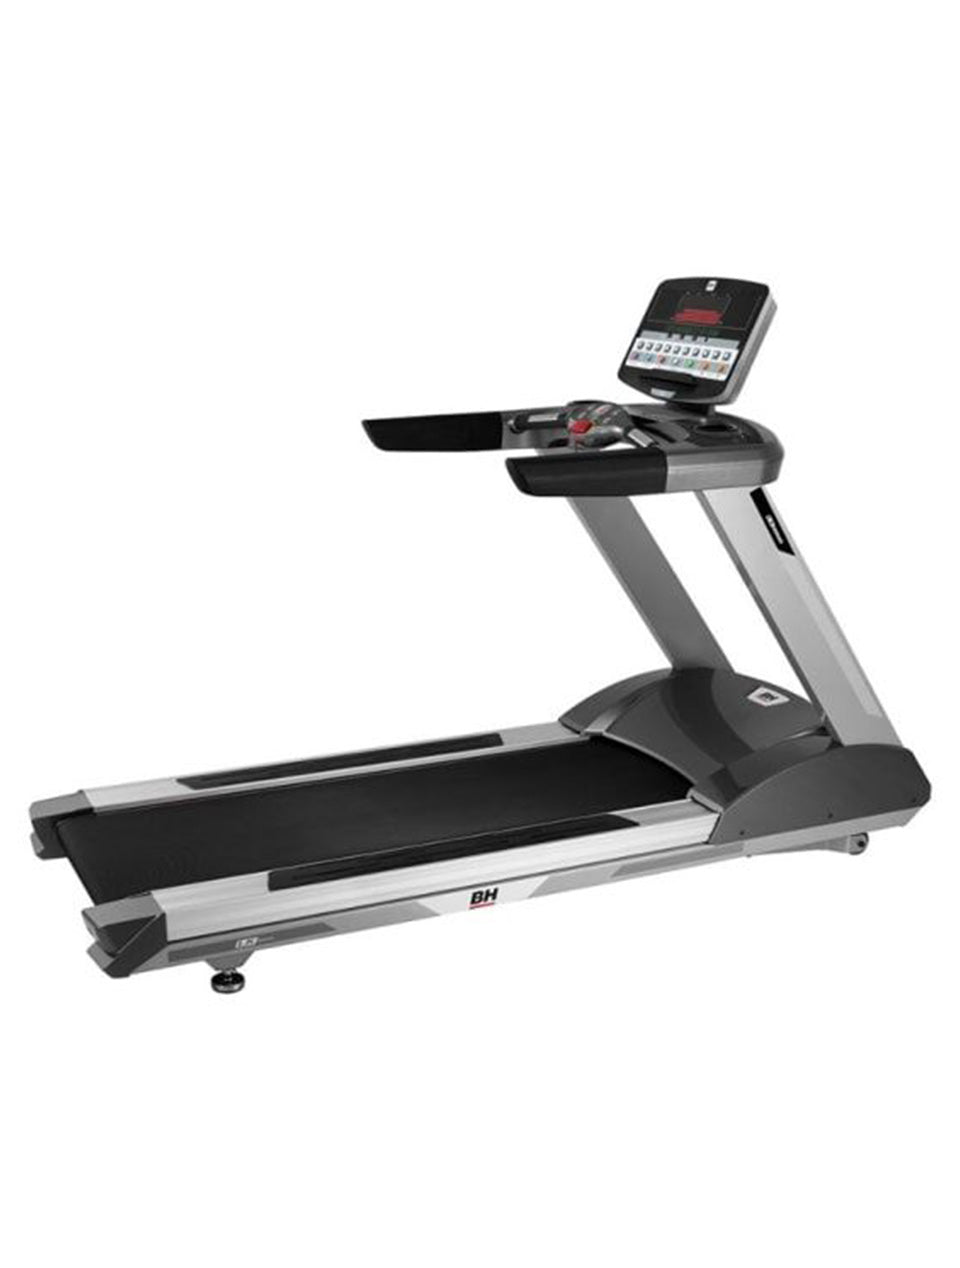 BH Fitness LK6800 Treadmill G680bm Base Model w/o Monitor